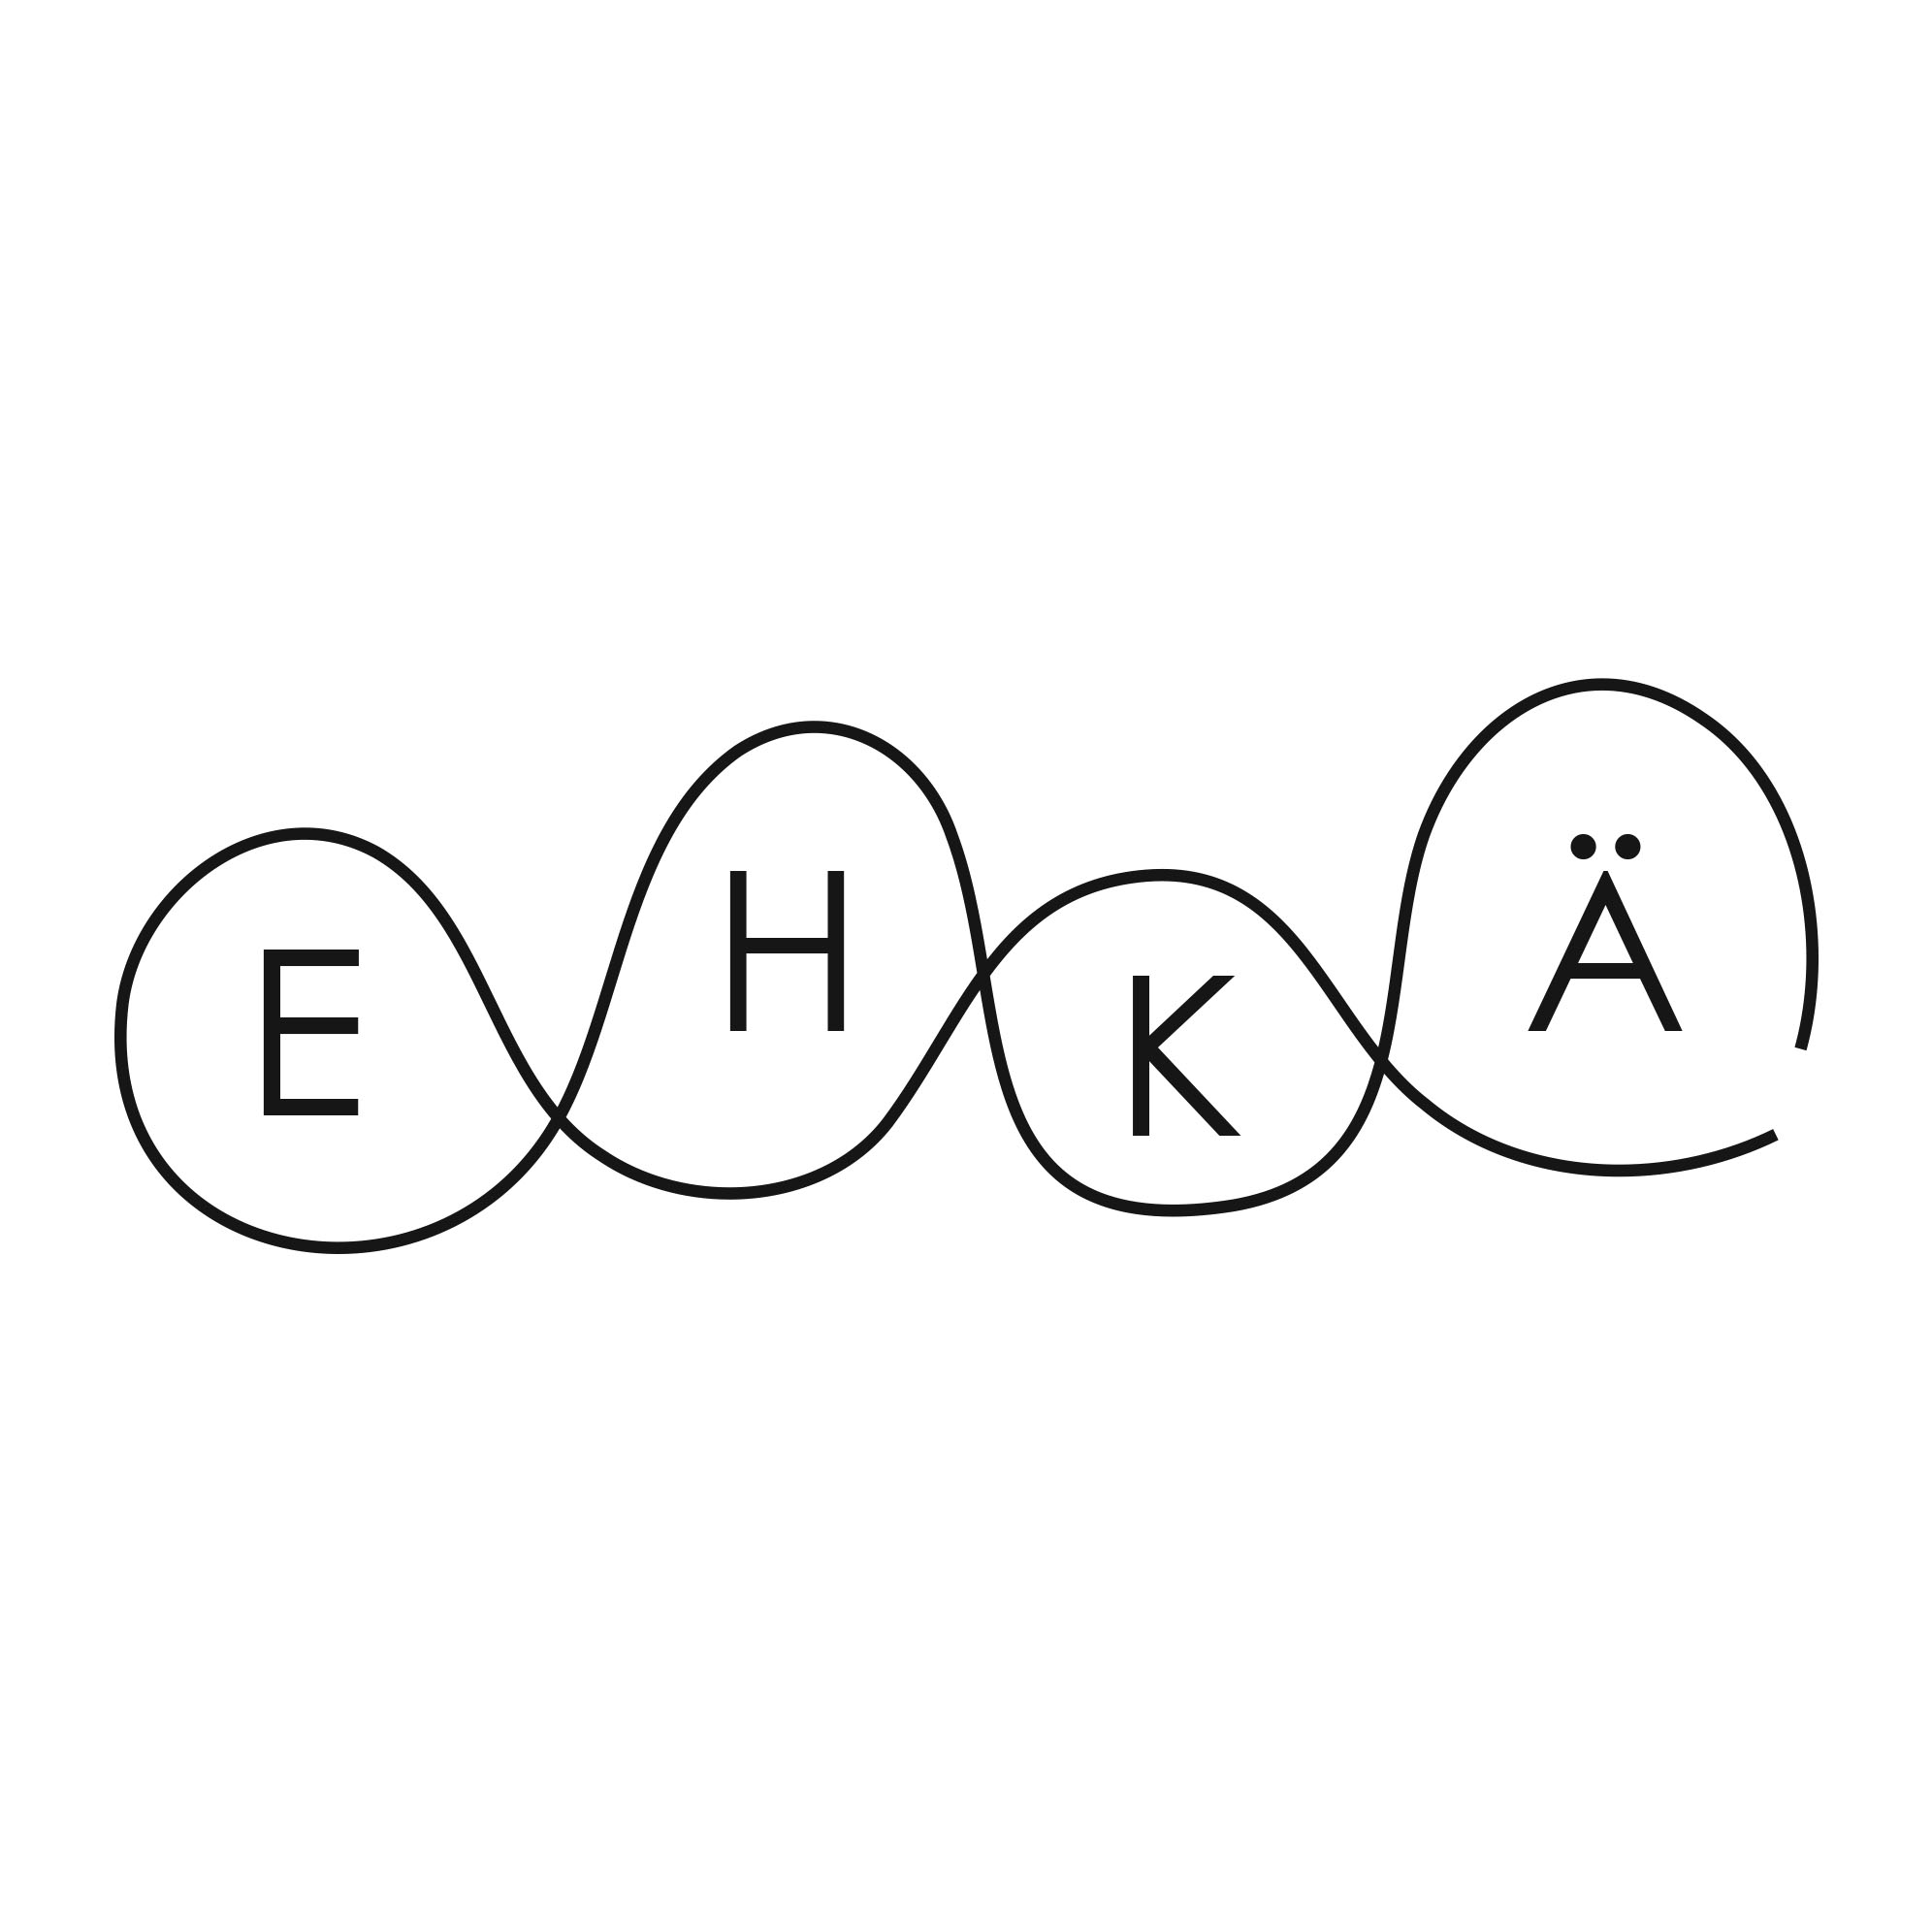 (c) Ehka.net